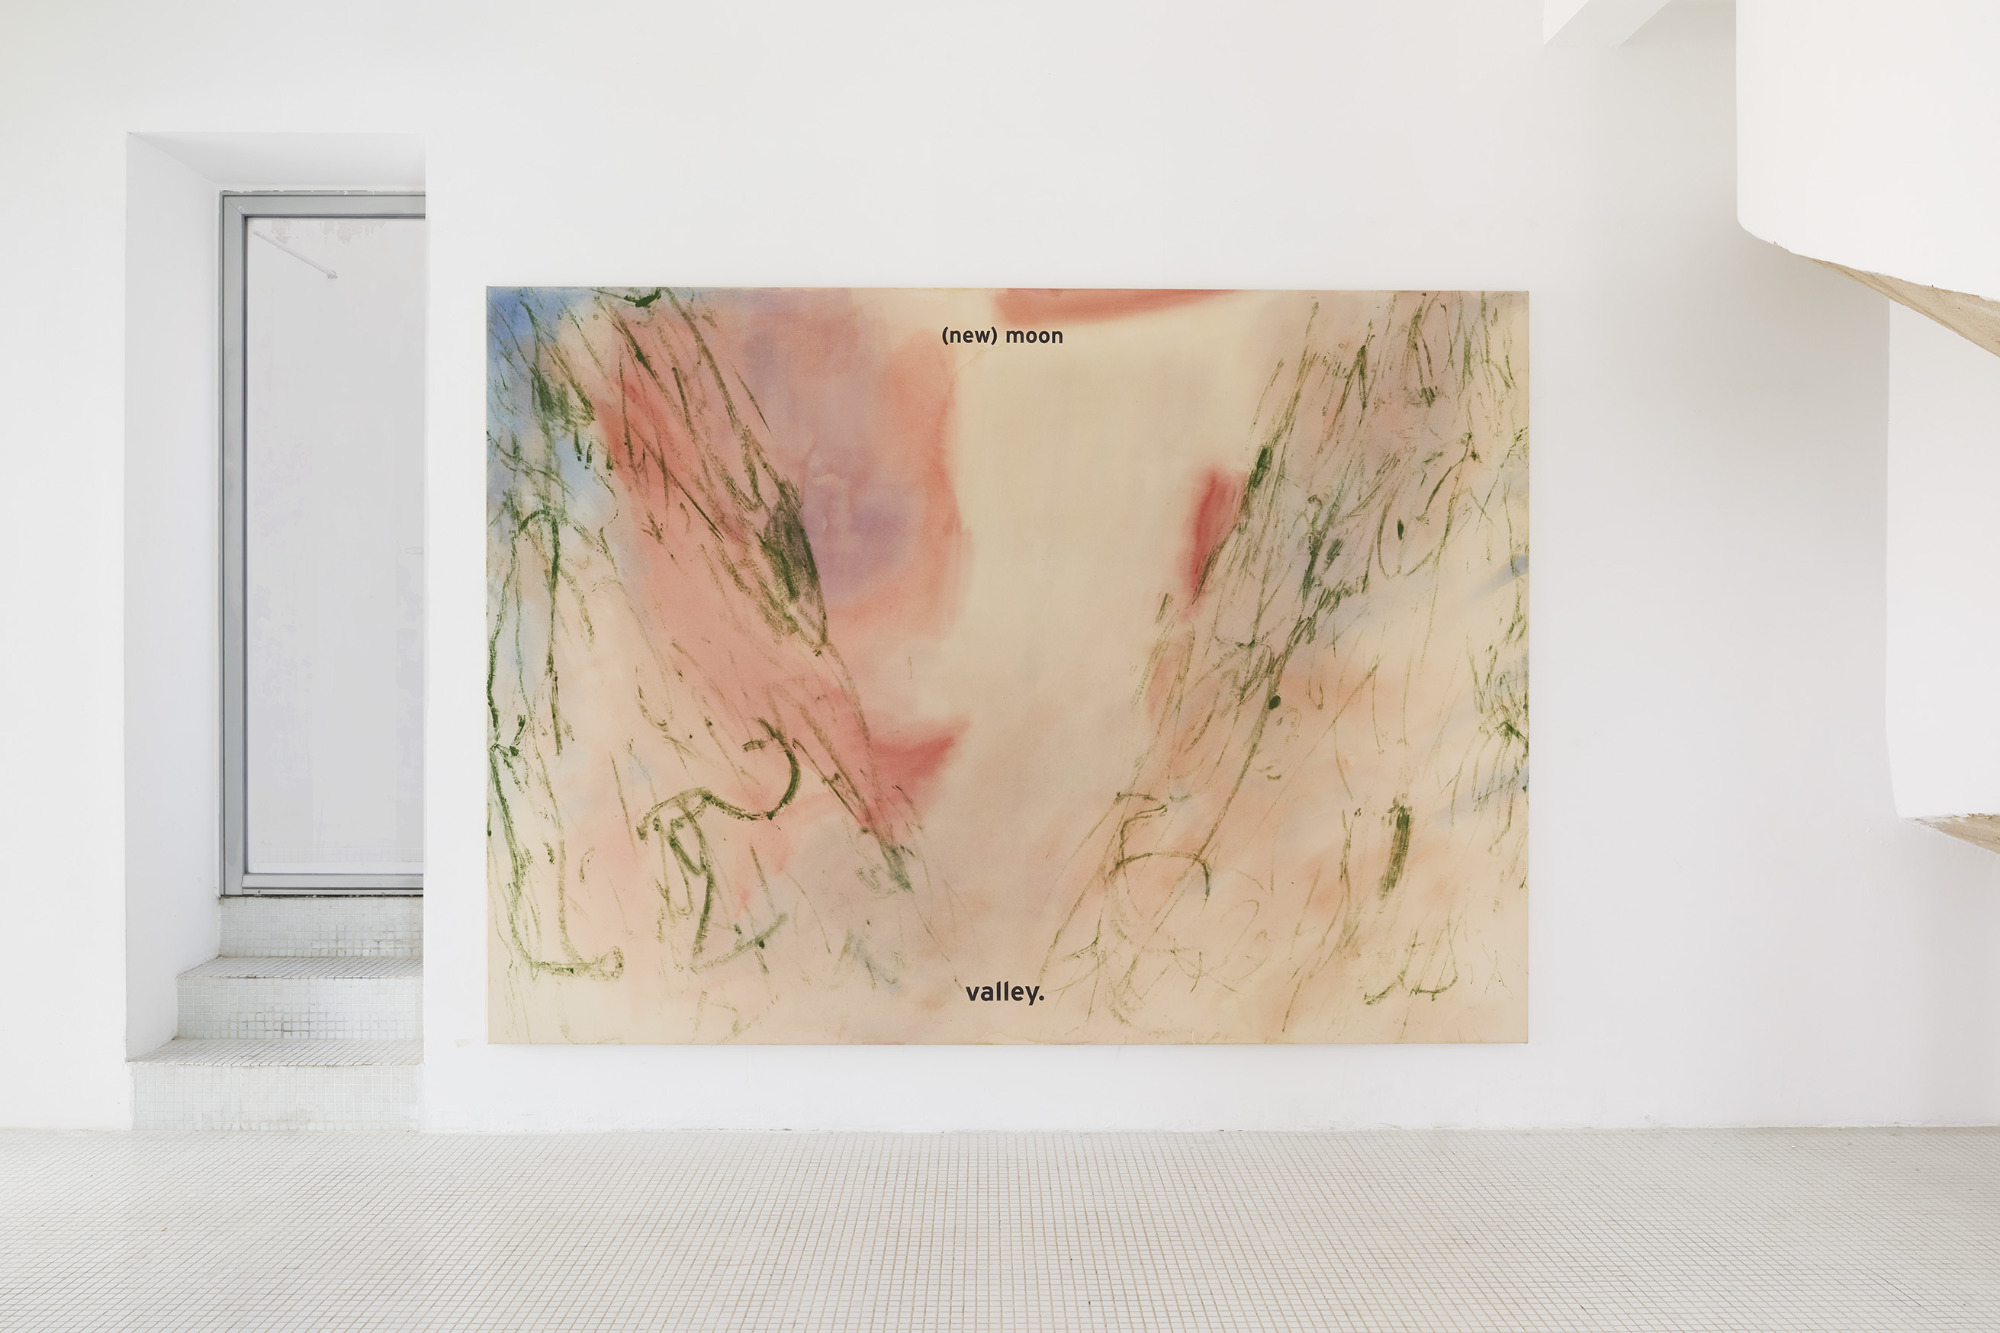 pinch, 400 x 150 x 150 cm, 2016 - Joseph Cornelius